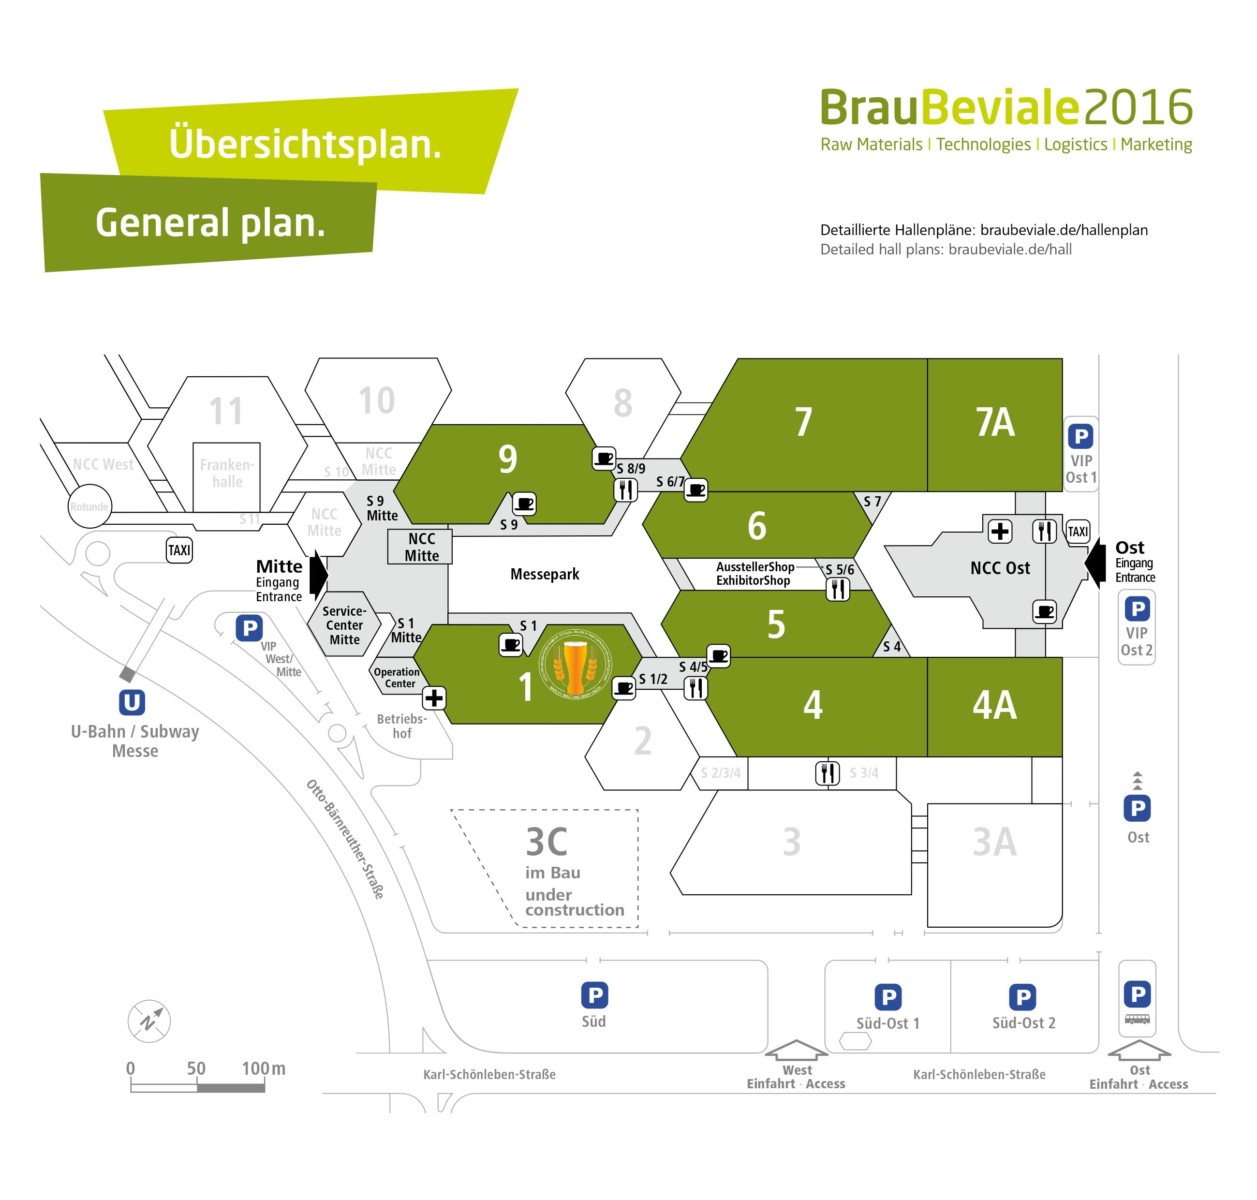 BrauBeviale 2016 Hallenplan + bmbu